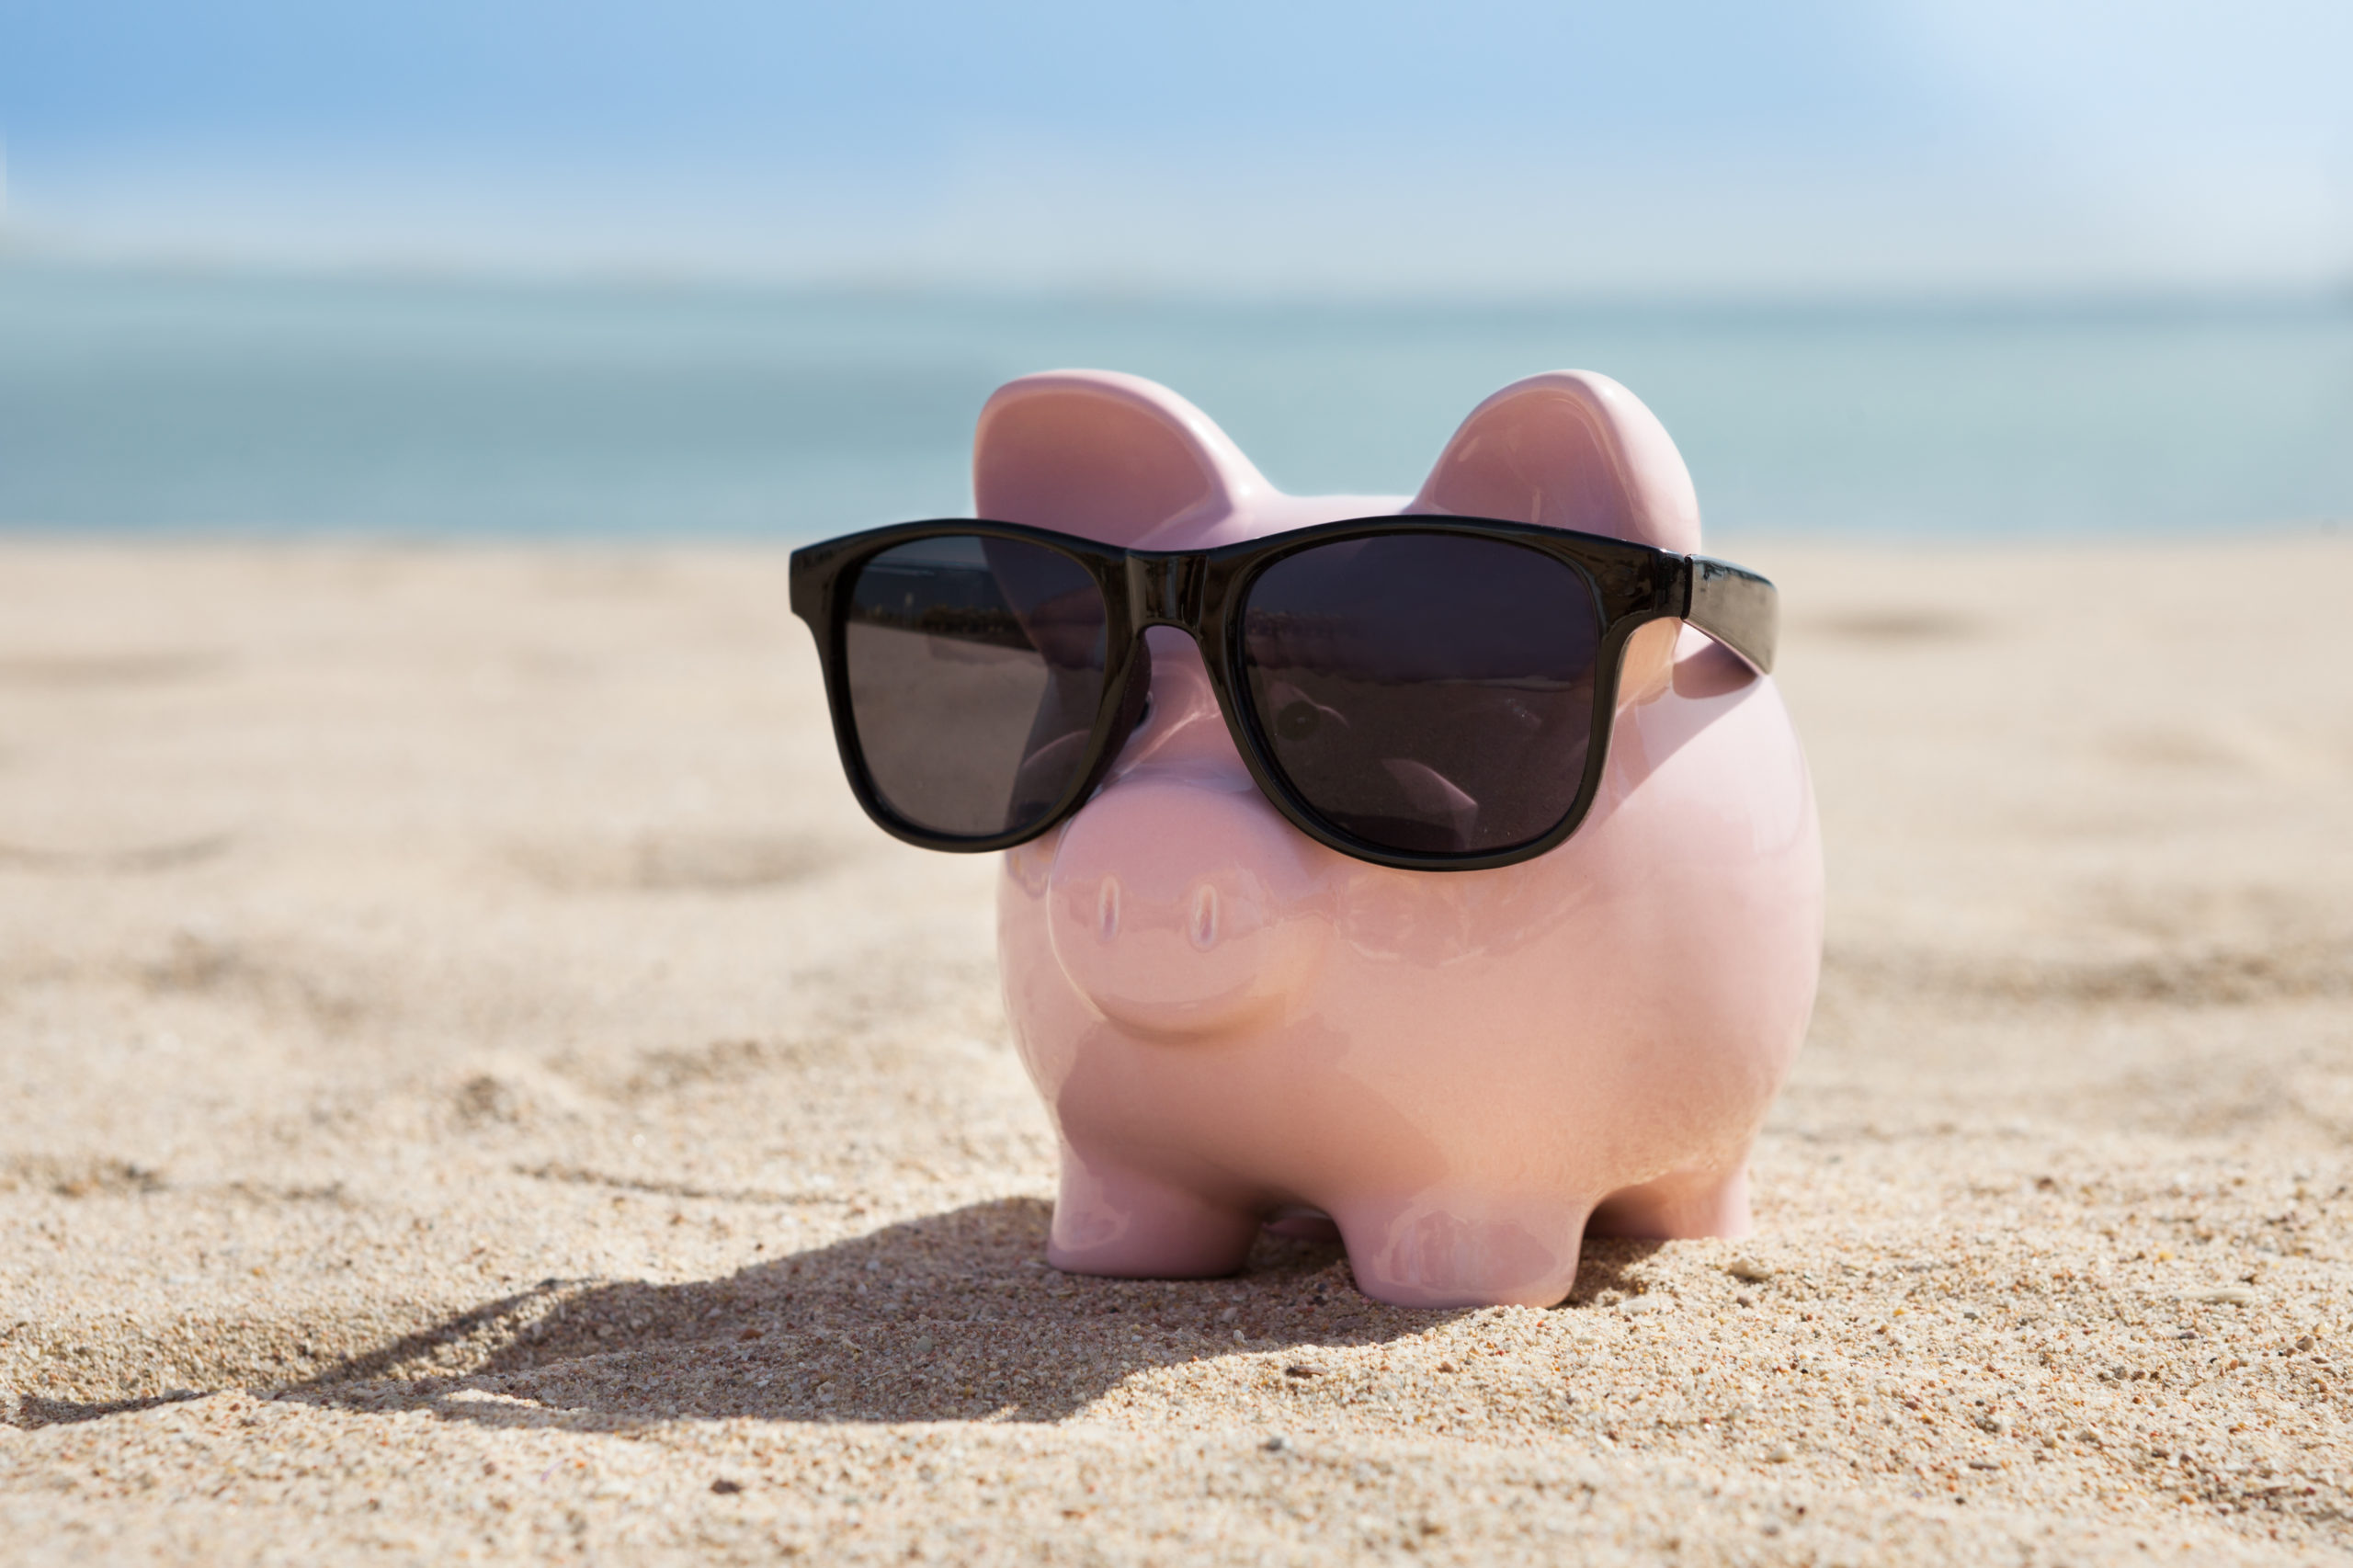 Piggy Bank With Black Sunglasses